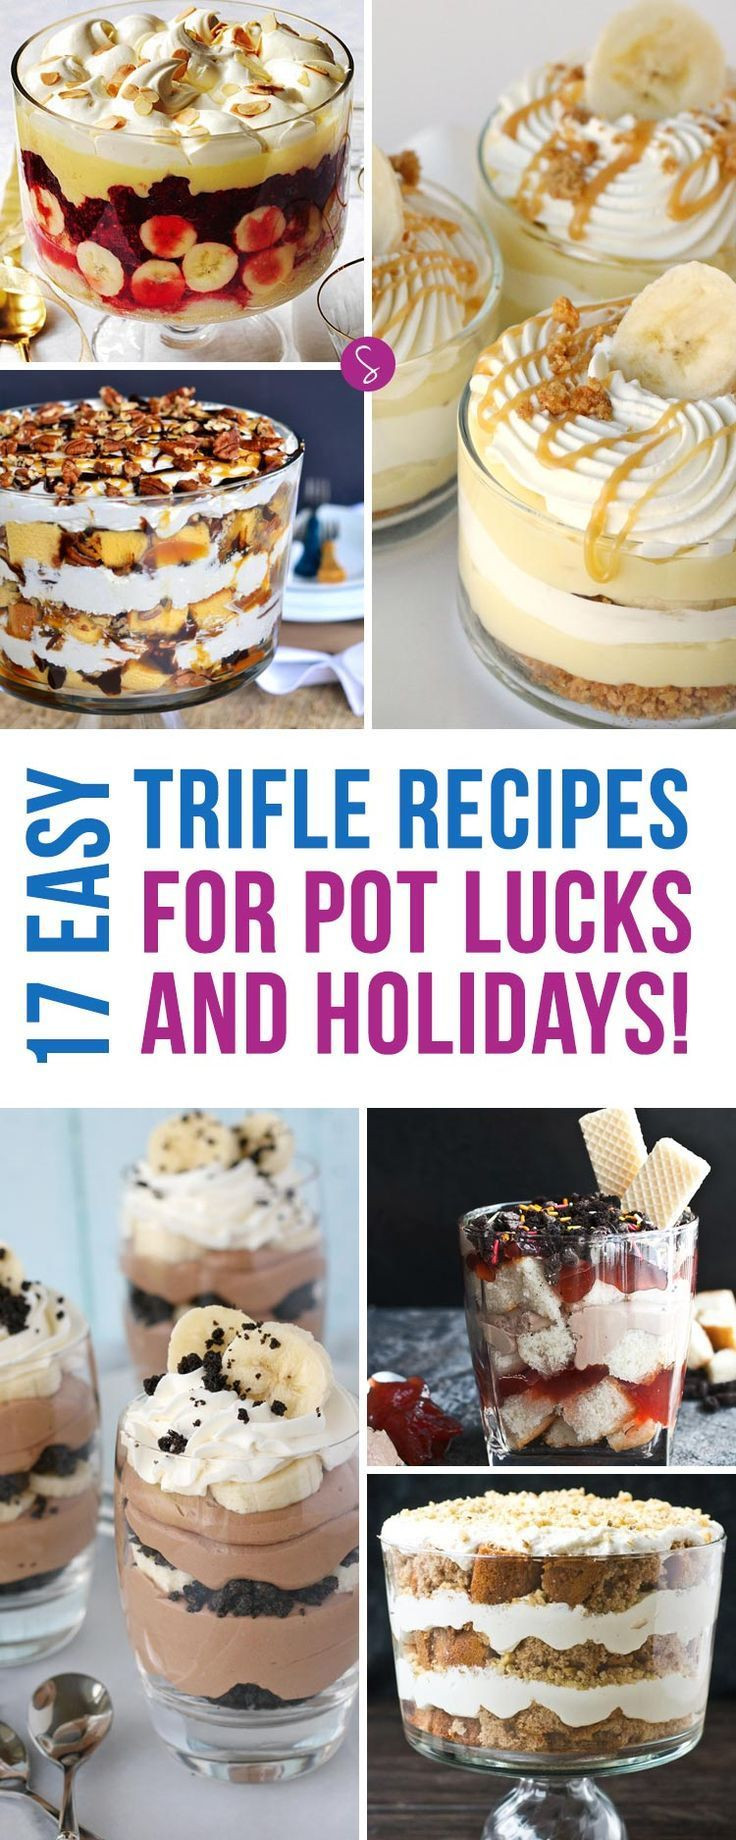 Easy Potluck Desserts
 100 Church Potluck Recipes on Pinterest